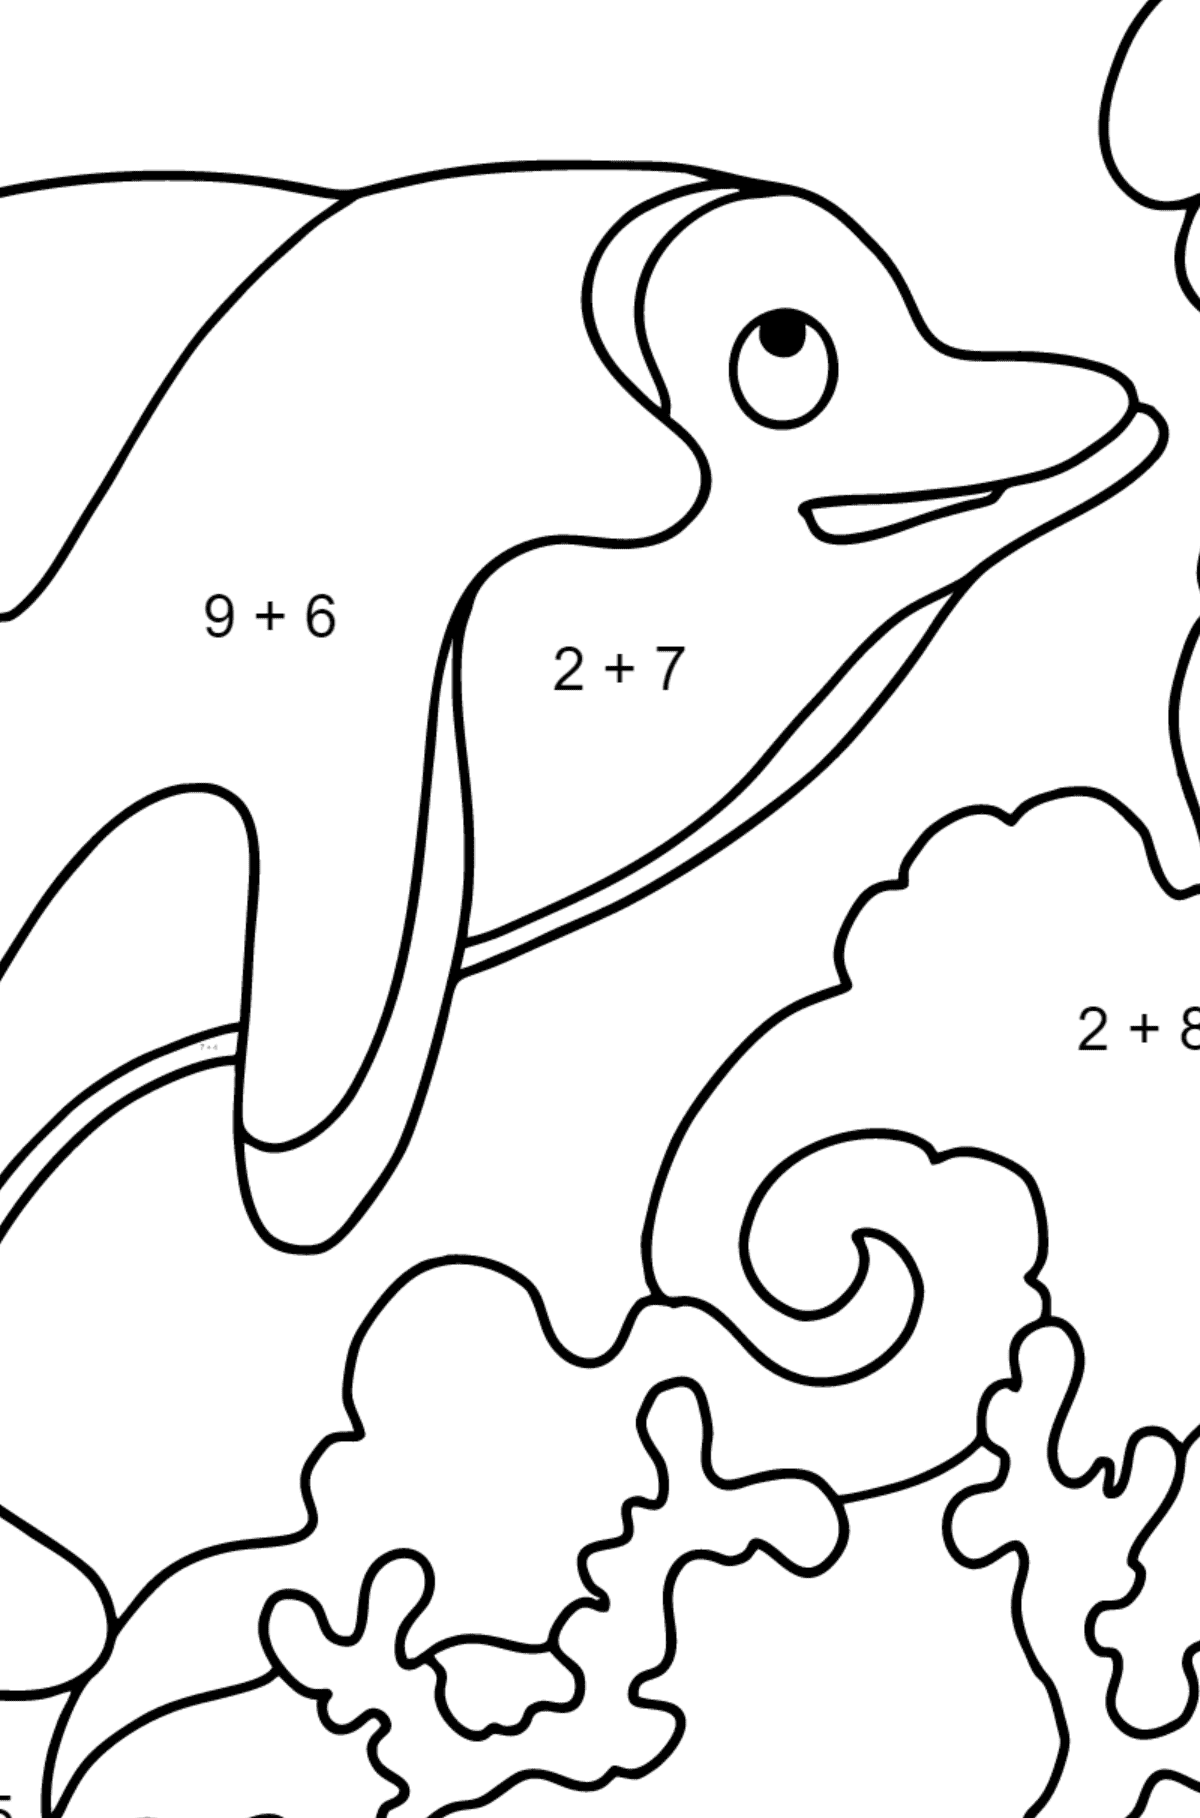 Розмальовка дельфіна для дітей - Математична Розмальовка Додавання для дітей